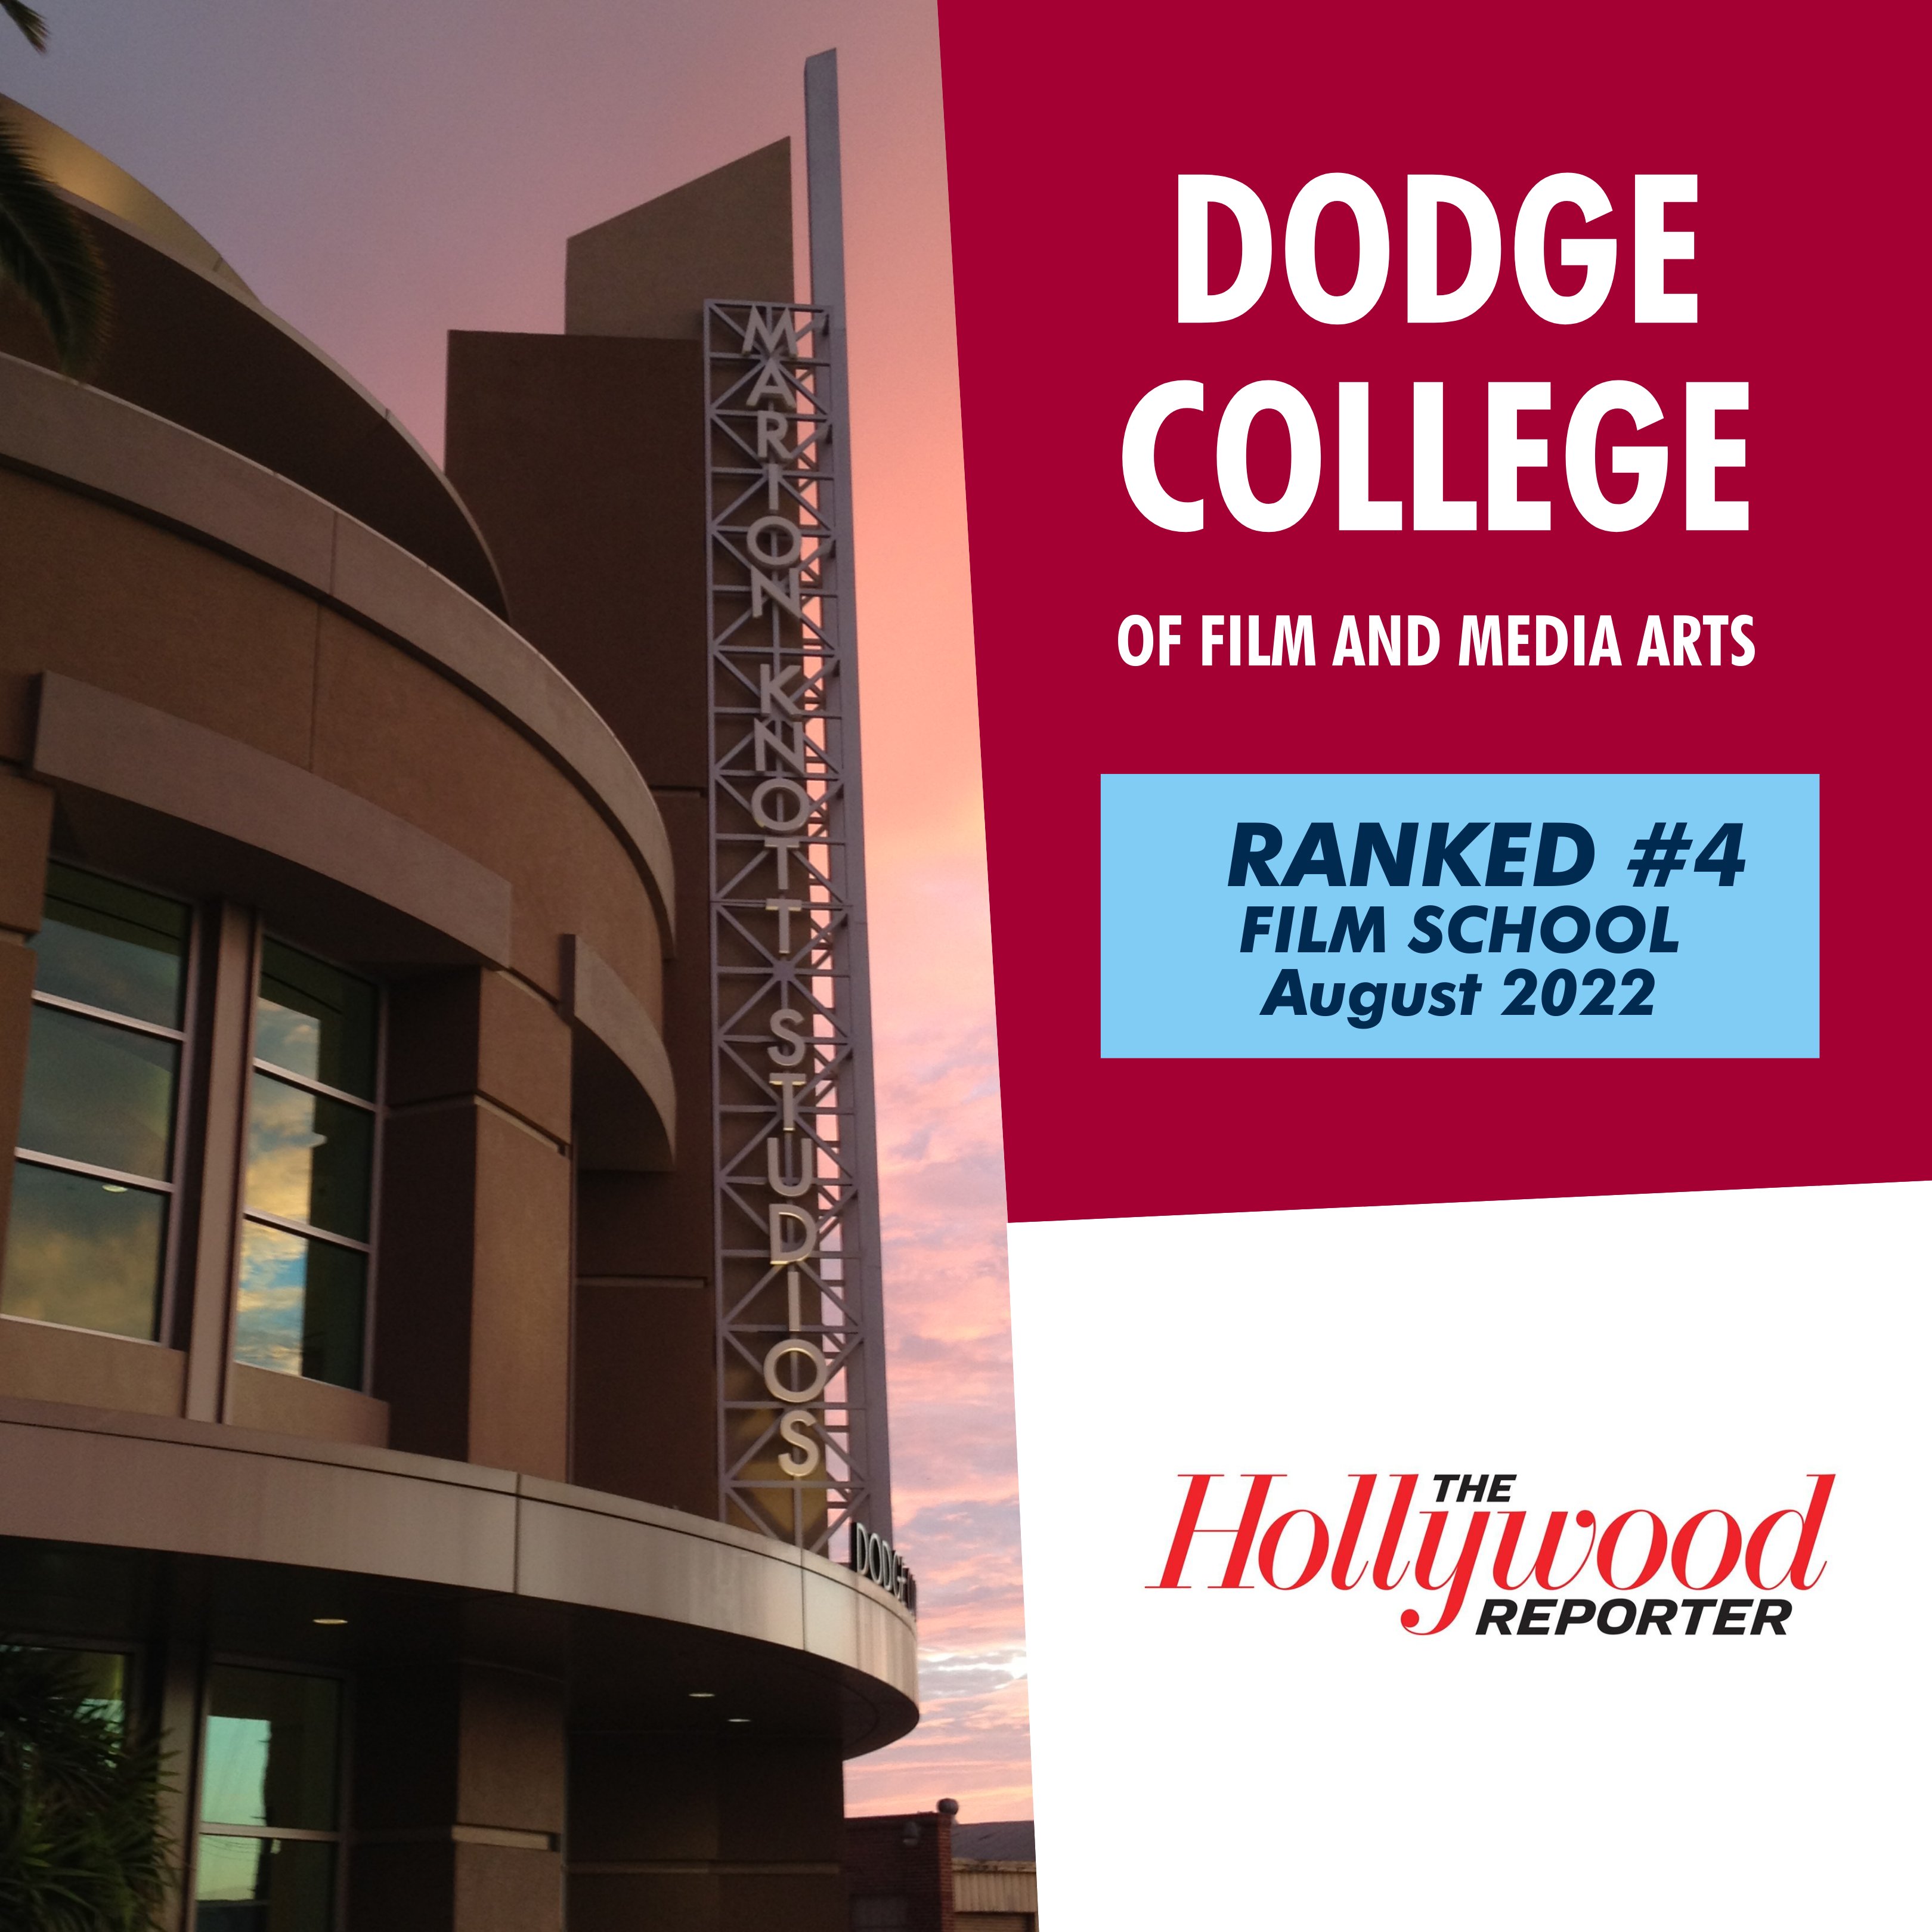 luego capoc liberal Dodge College of Film and Media Arts (@CU_DodgeCollege) / Twitter